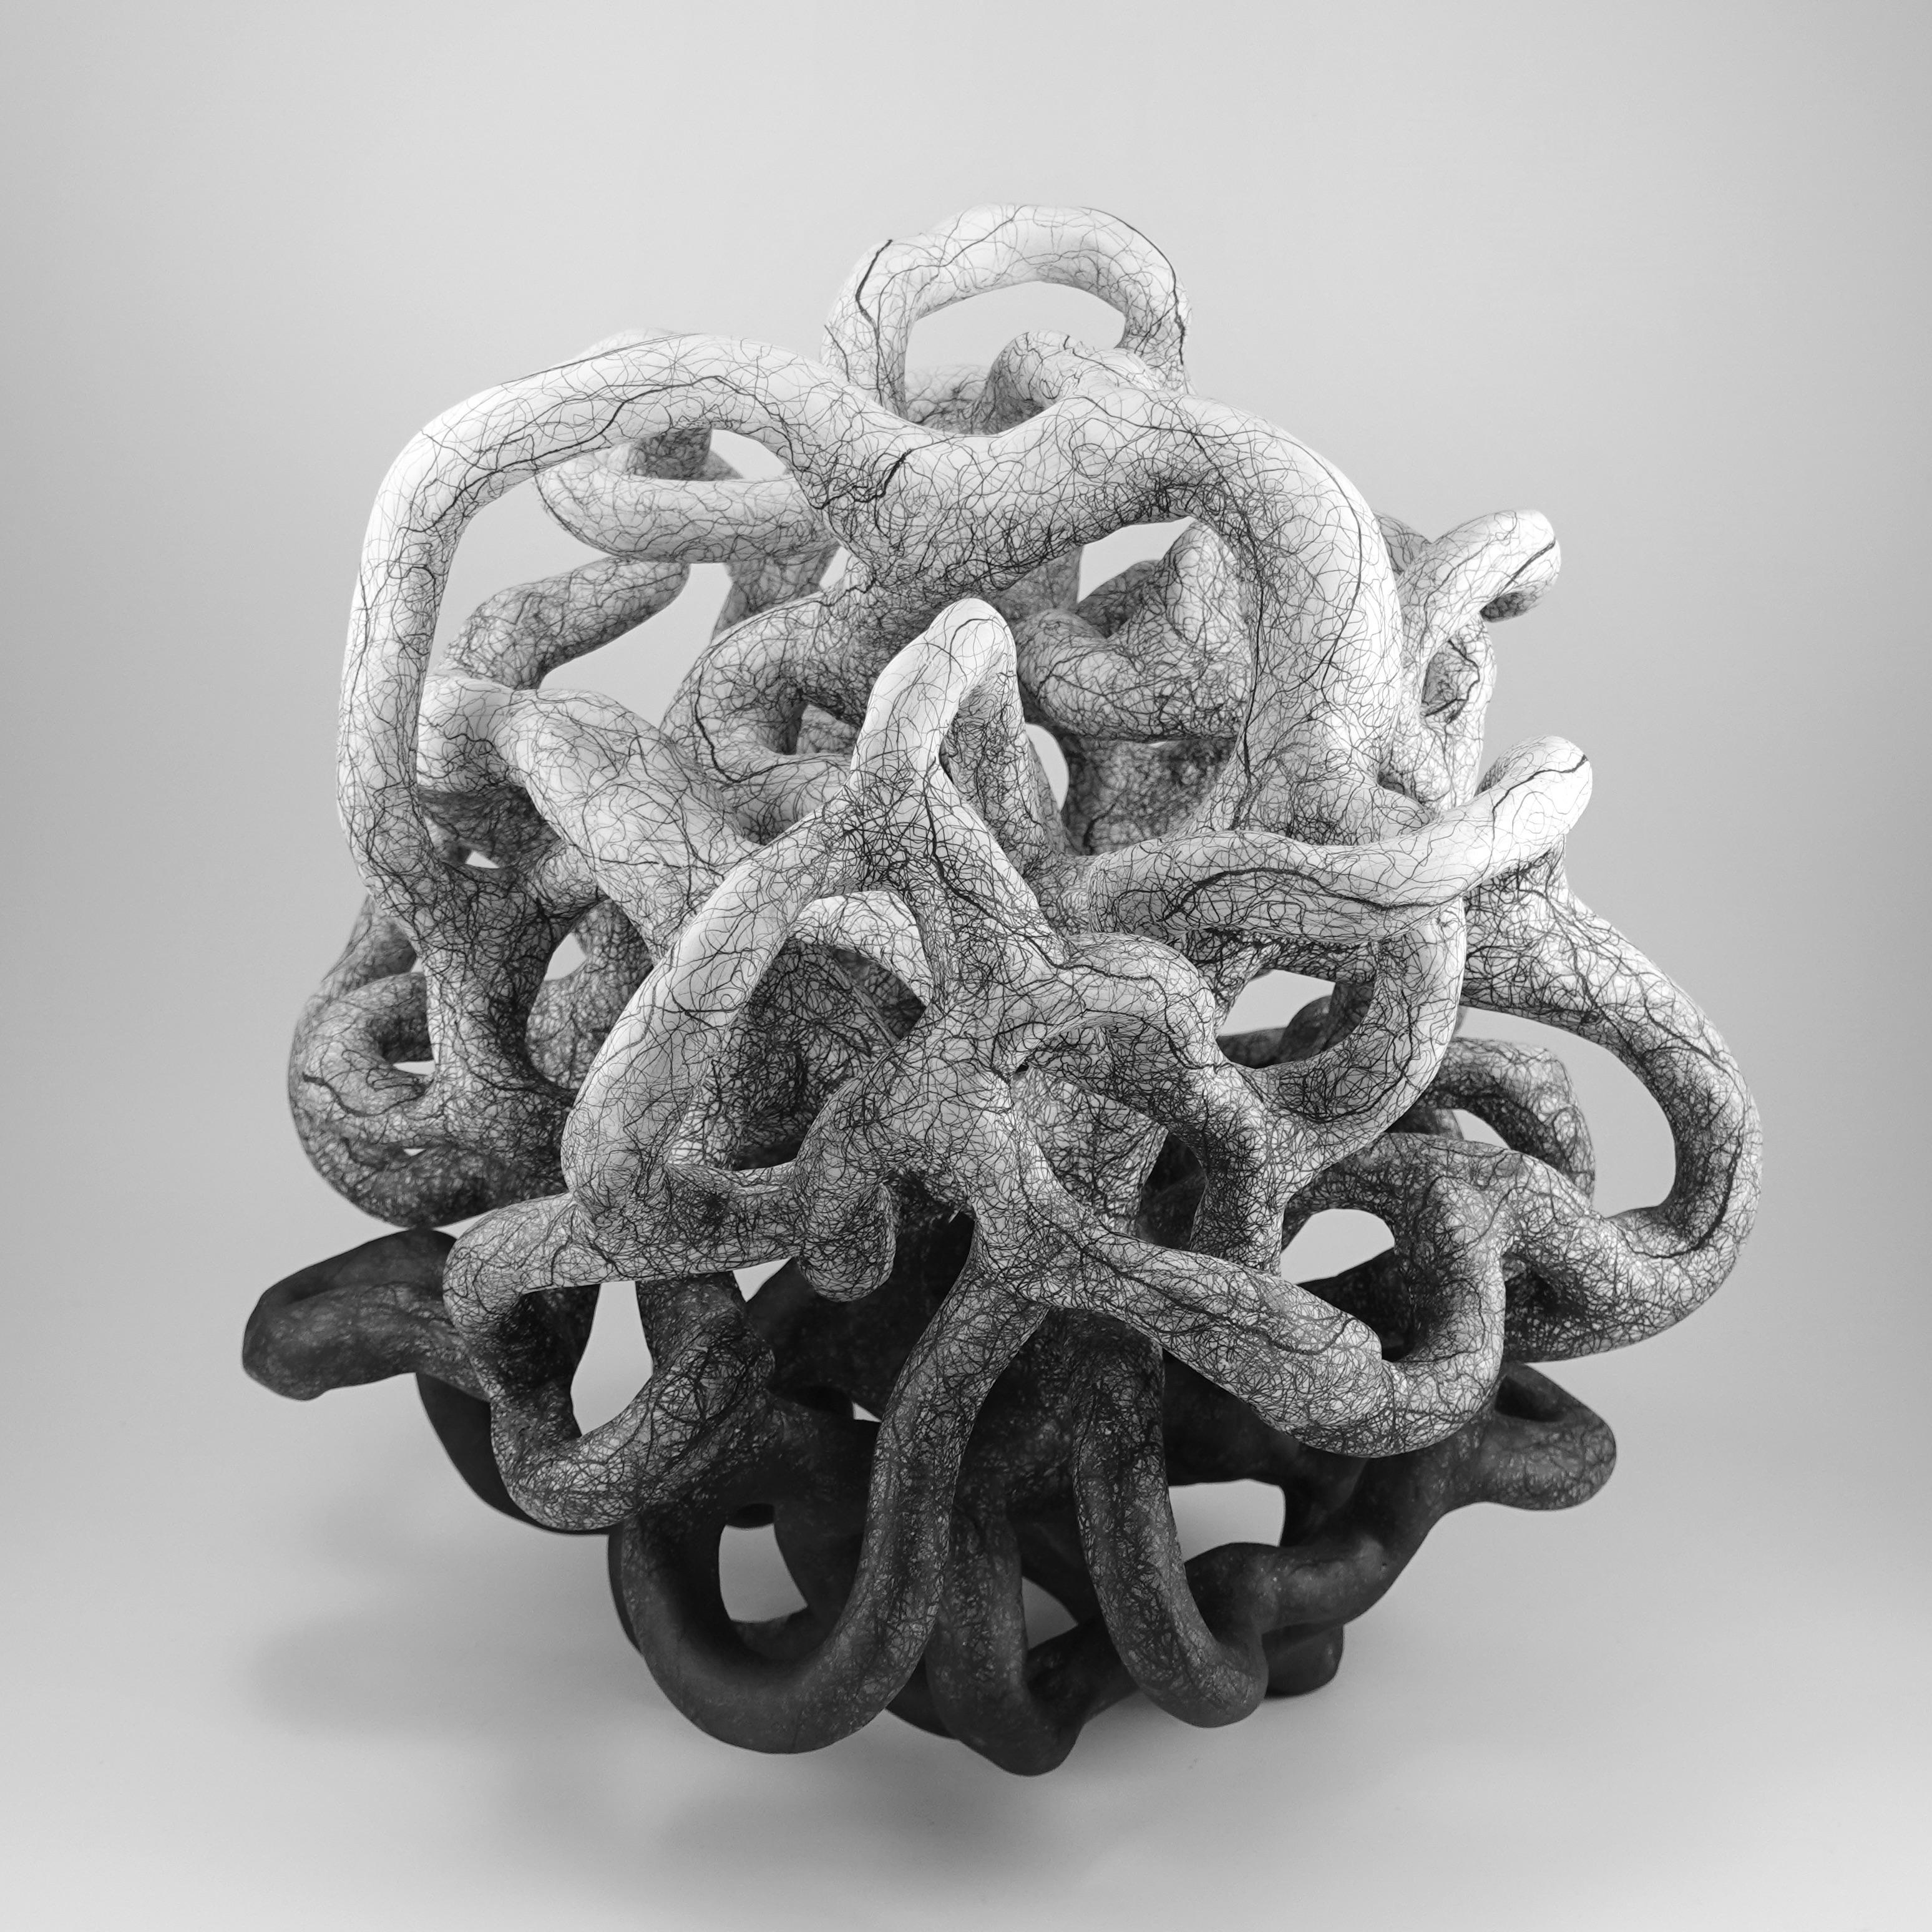 Abstract Sculpture Judi Tavill - Sculpture abstraite minimale en noir et blanc : "INVOLVE".